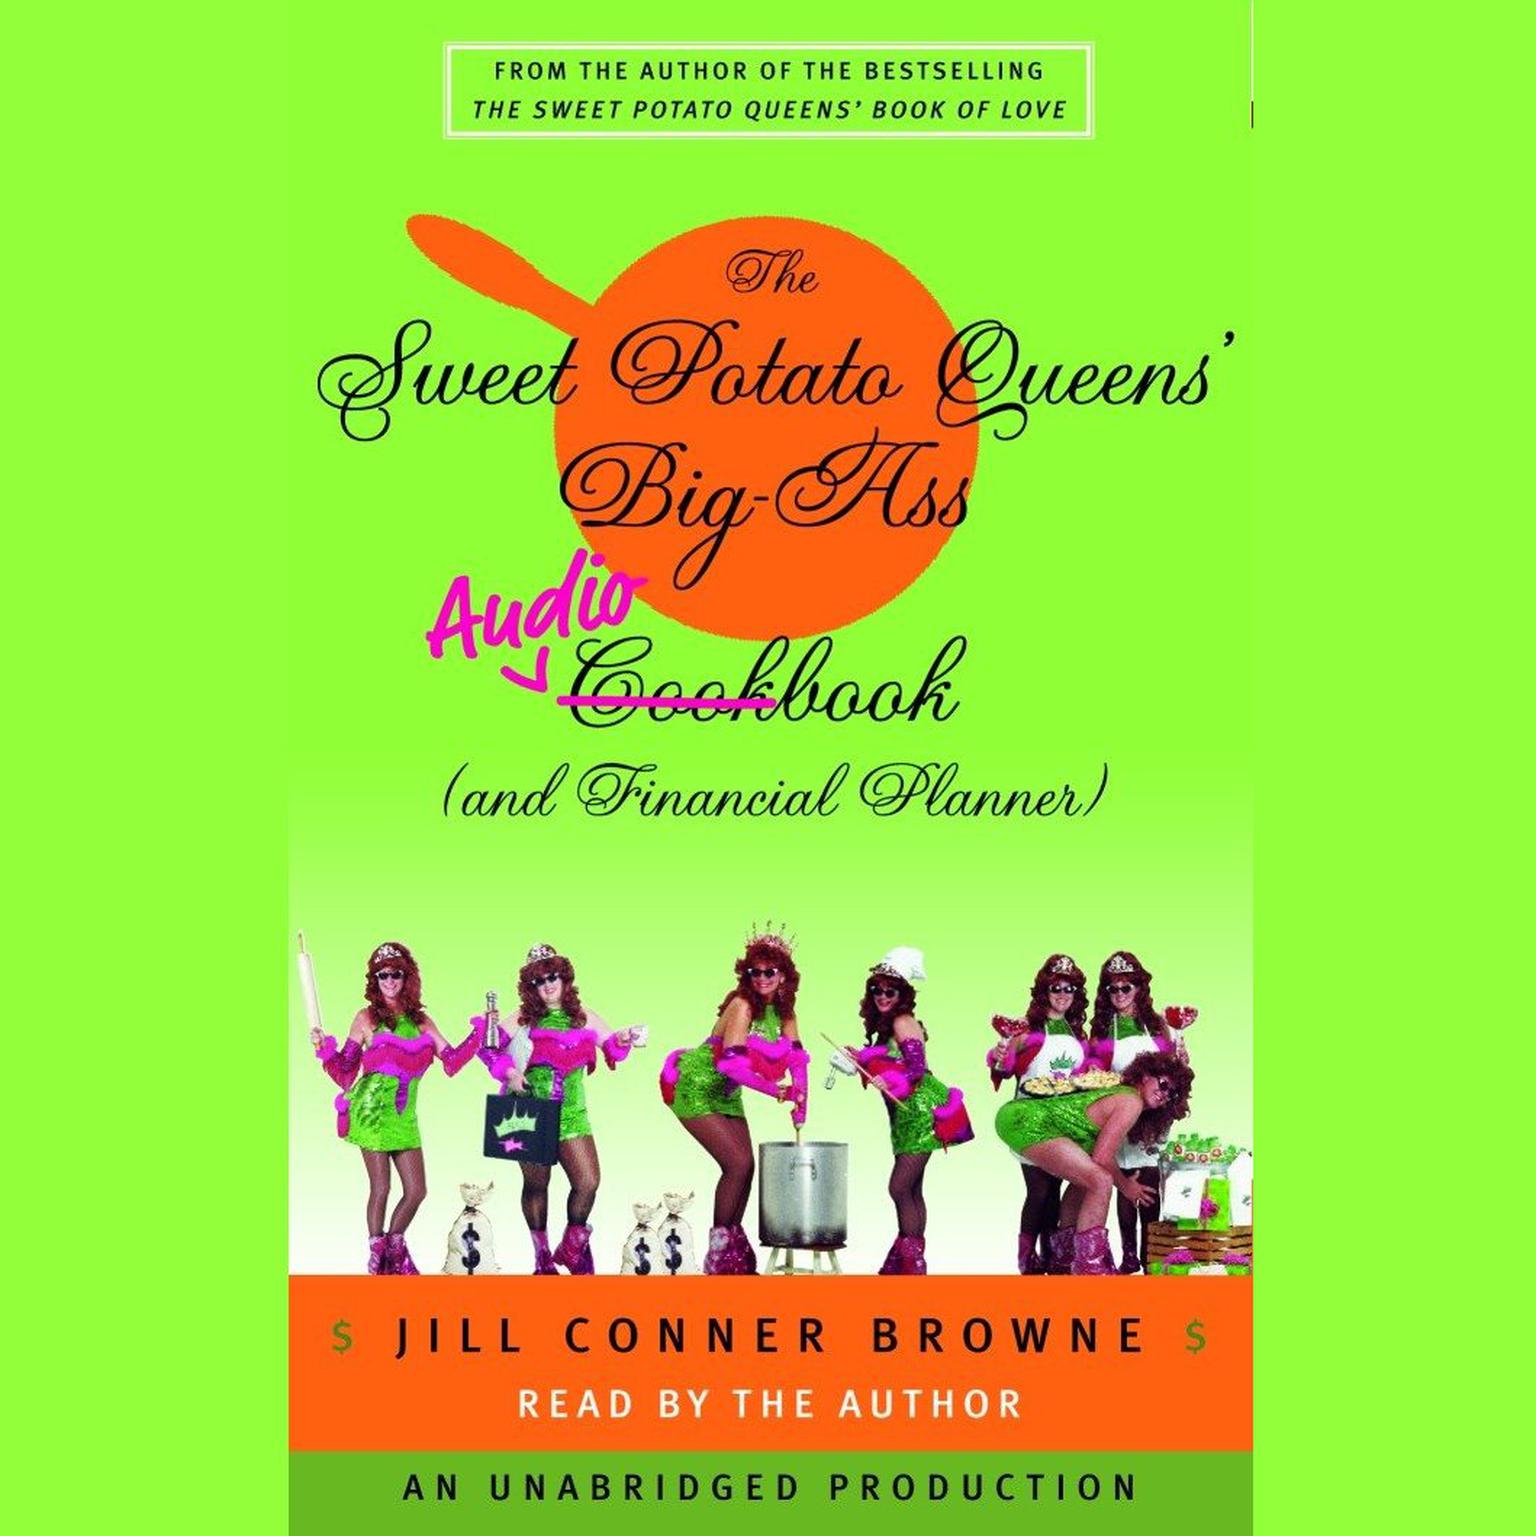 The Sweet Potato Queens Big-Ass Cookbook (and Financial Planner) Audiobook, by Jill Conner Browne